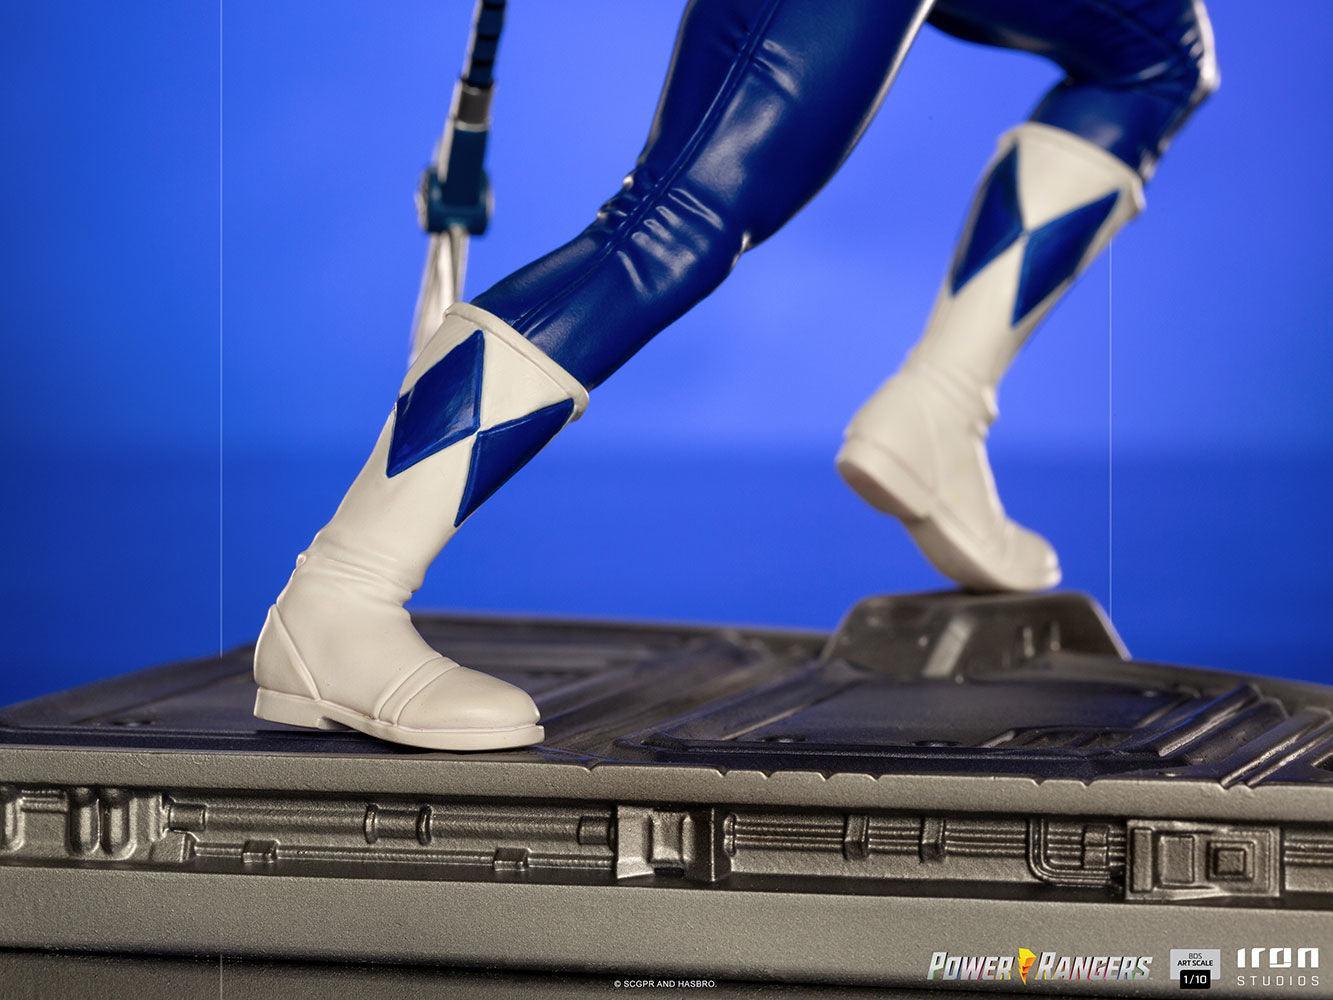 IRO28167 Power Rangers - Blue Ranger 1:10 Scale Statue - Iron Studios - Titan Pop Culture